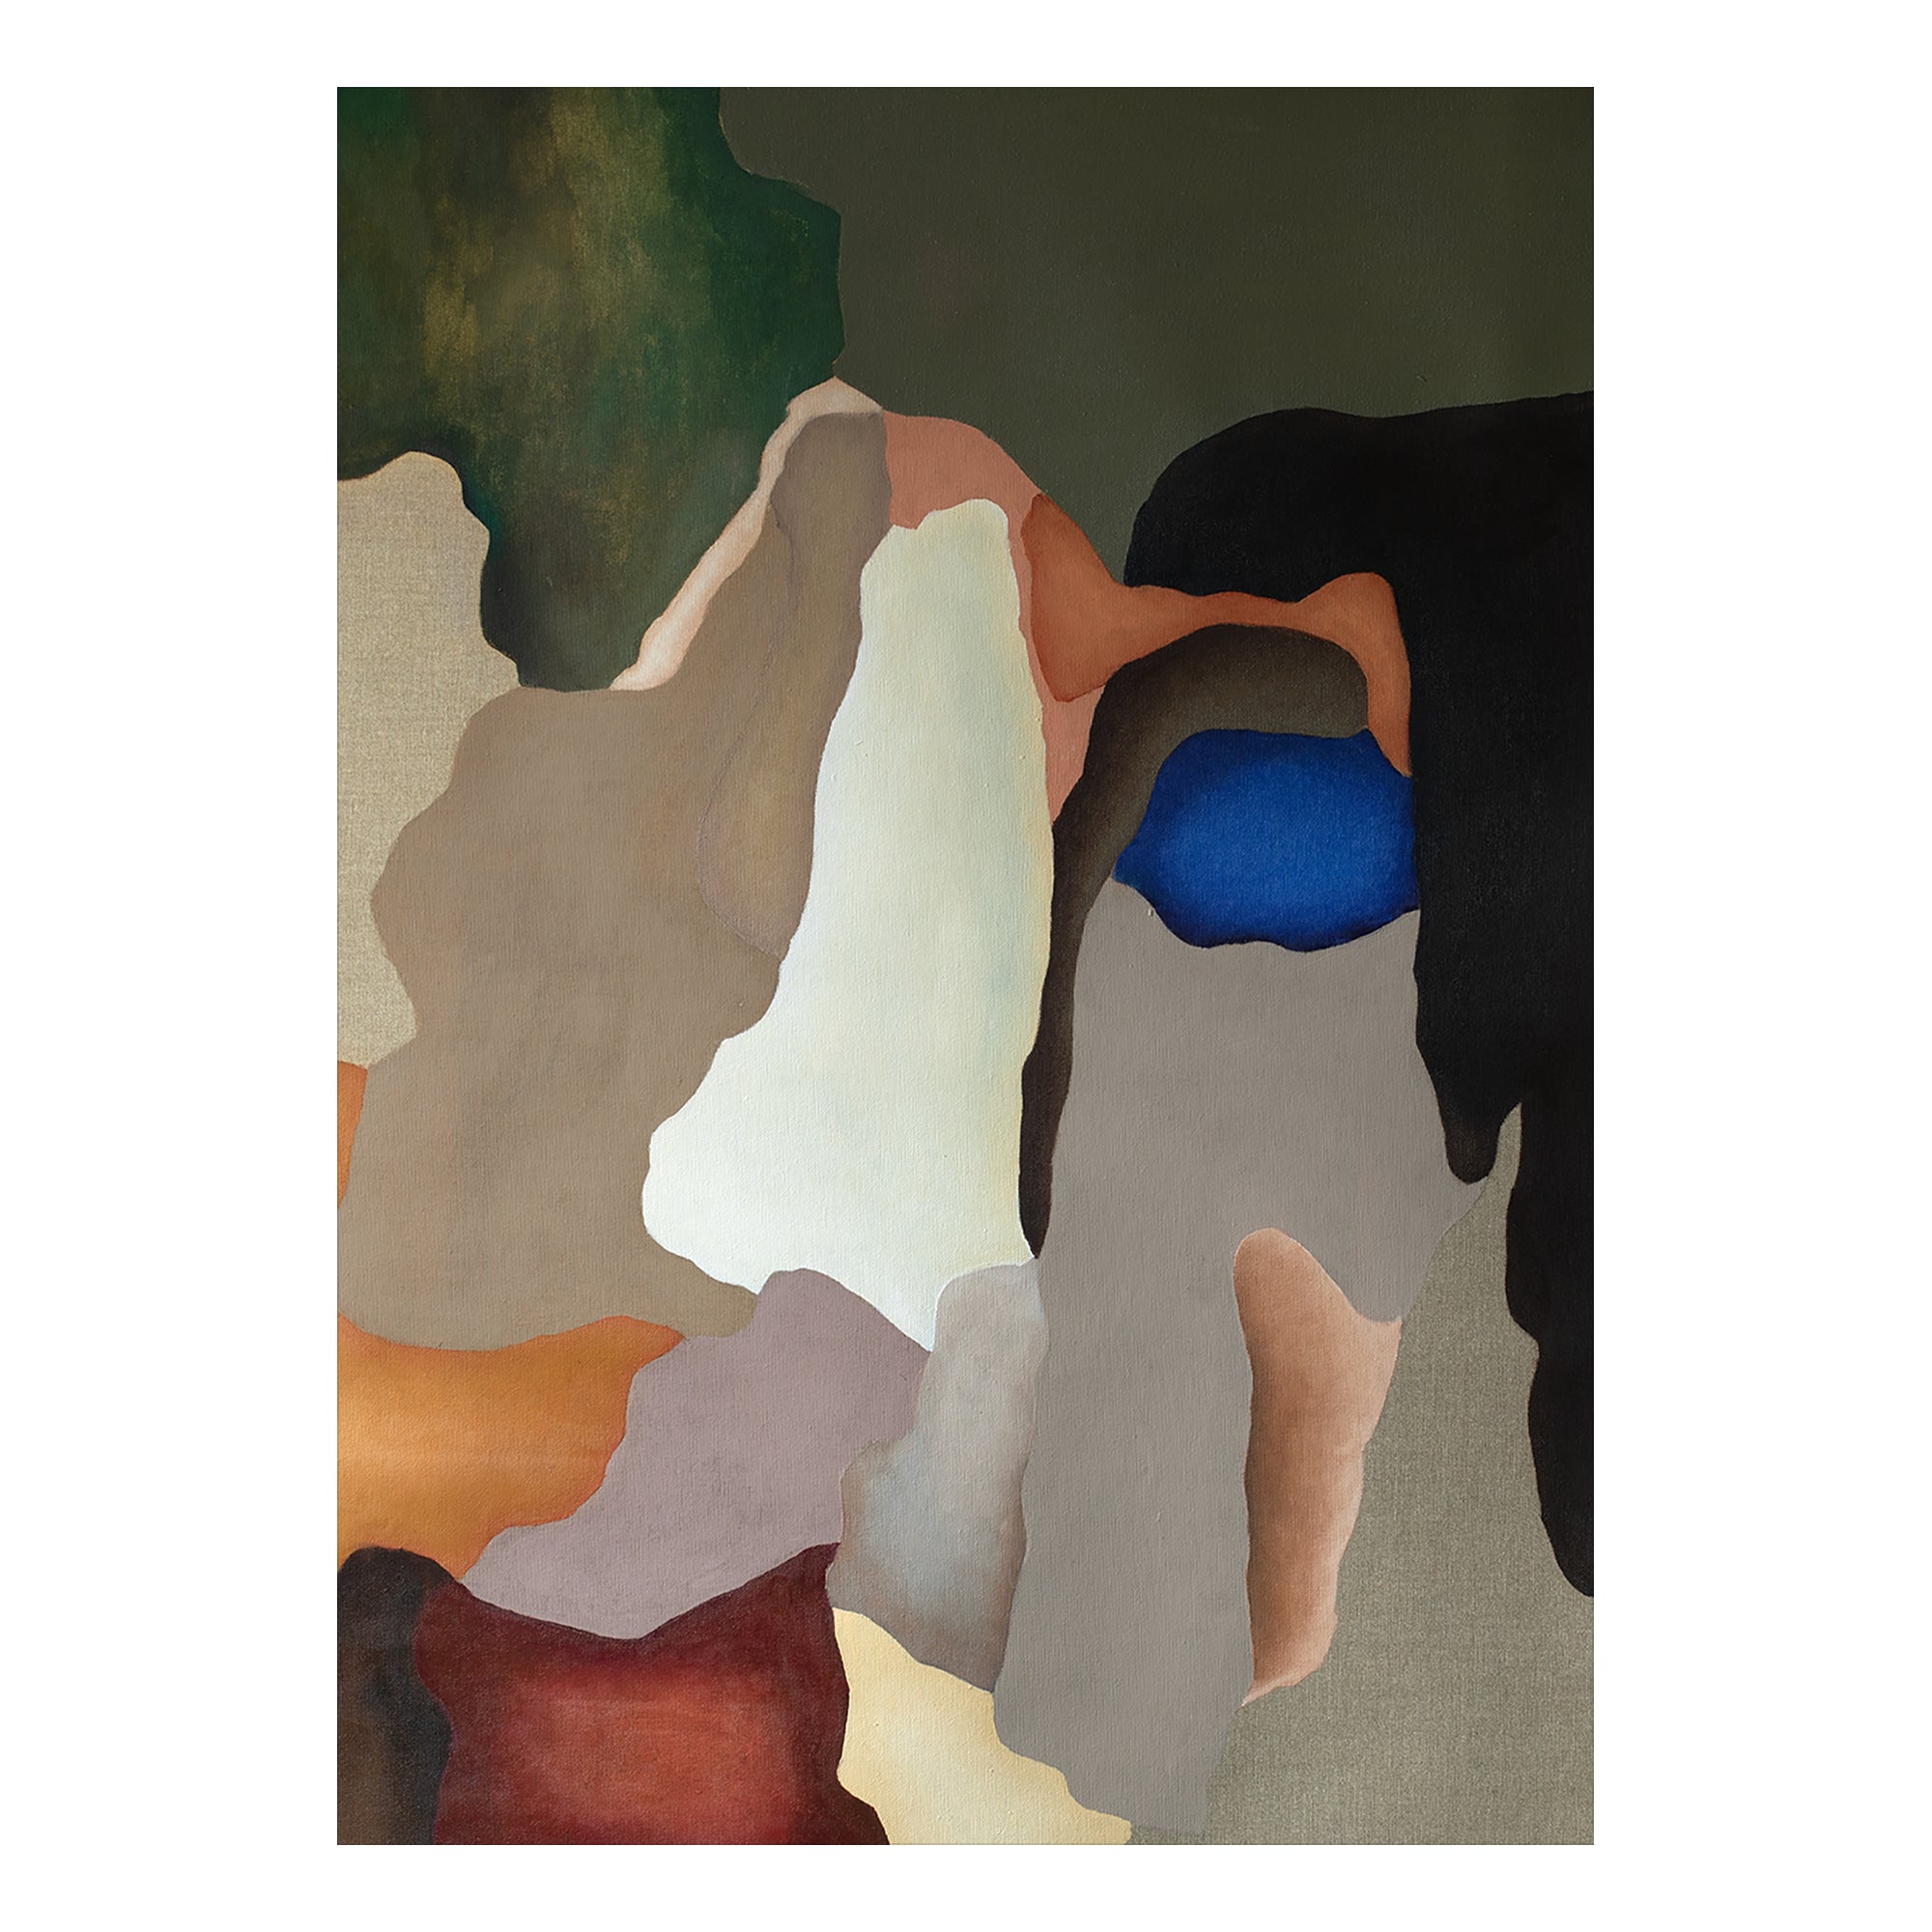 Conversations in Colour 02 by Elin Waak